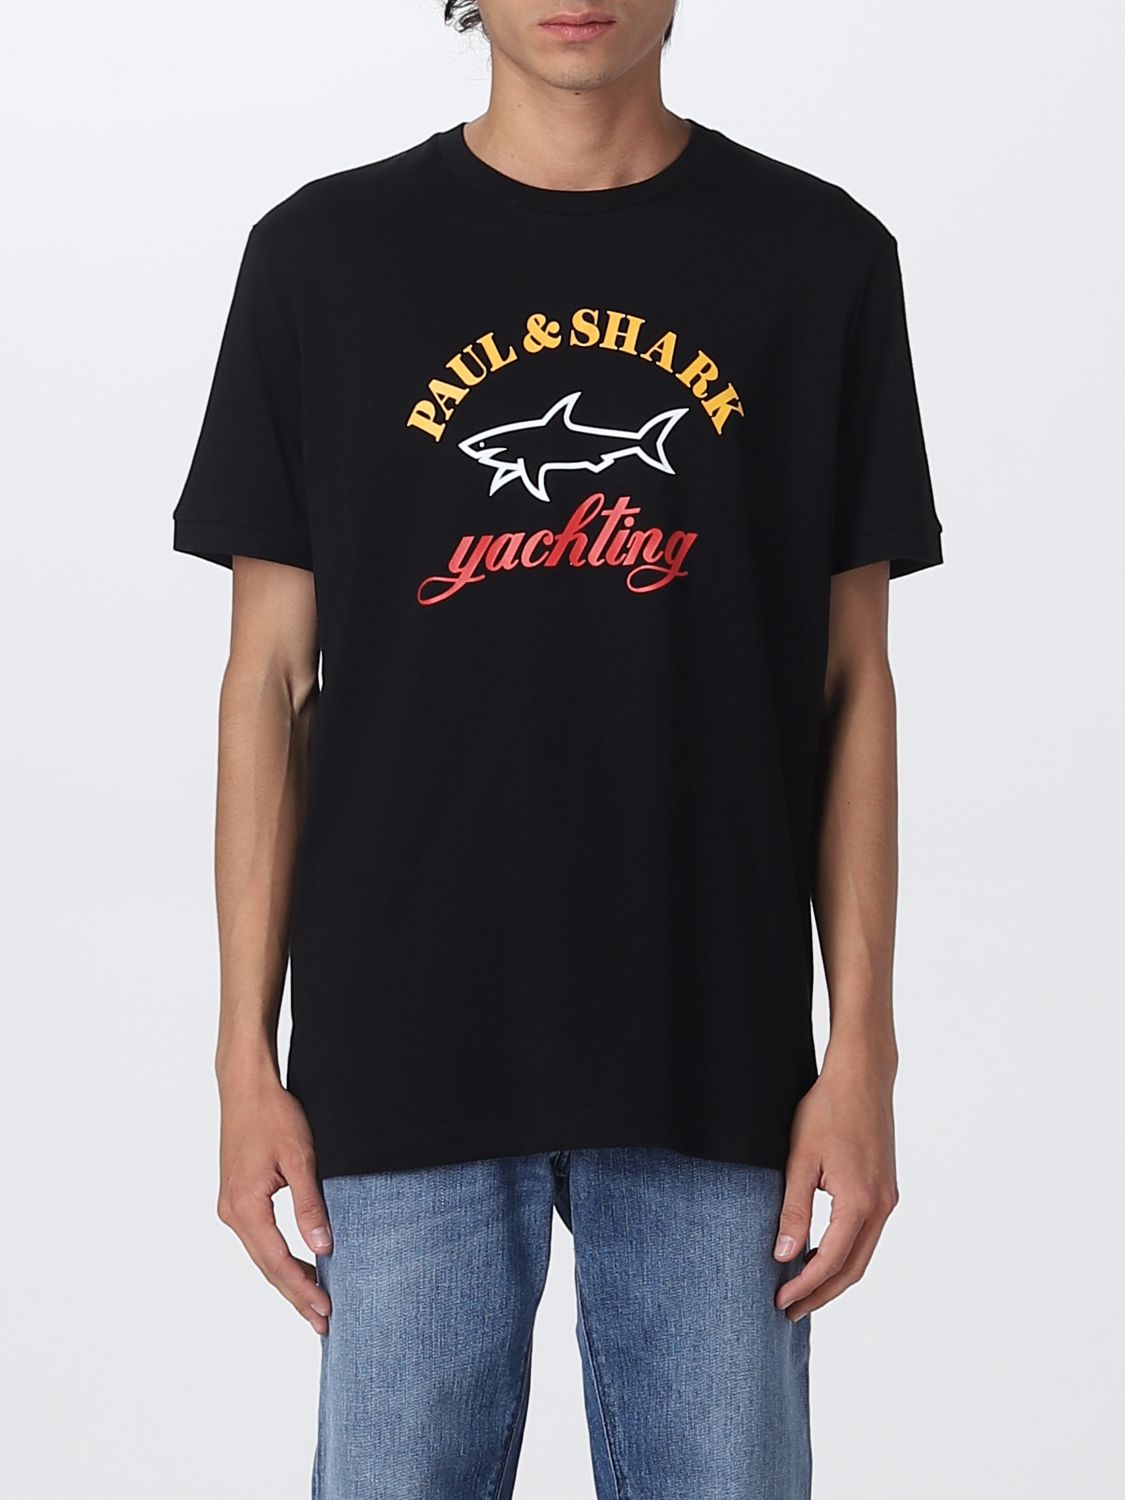 bevel Misleidend Blaast op PAUL & SHARK: t-shirt for man - Black | Paul & Shark t-shirt C0P1006 online  on GIGLIO.COM